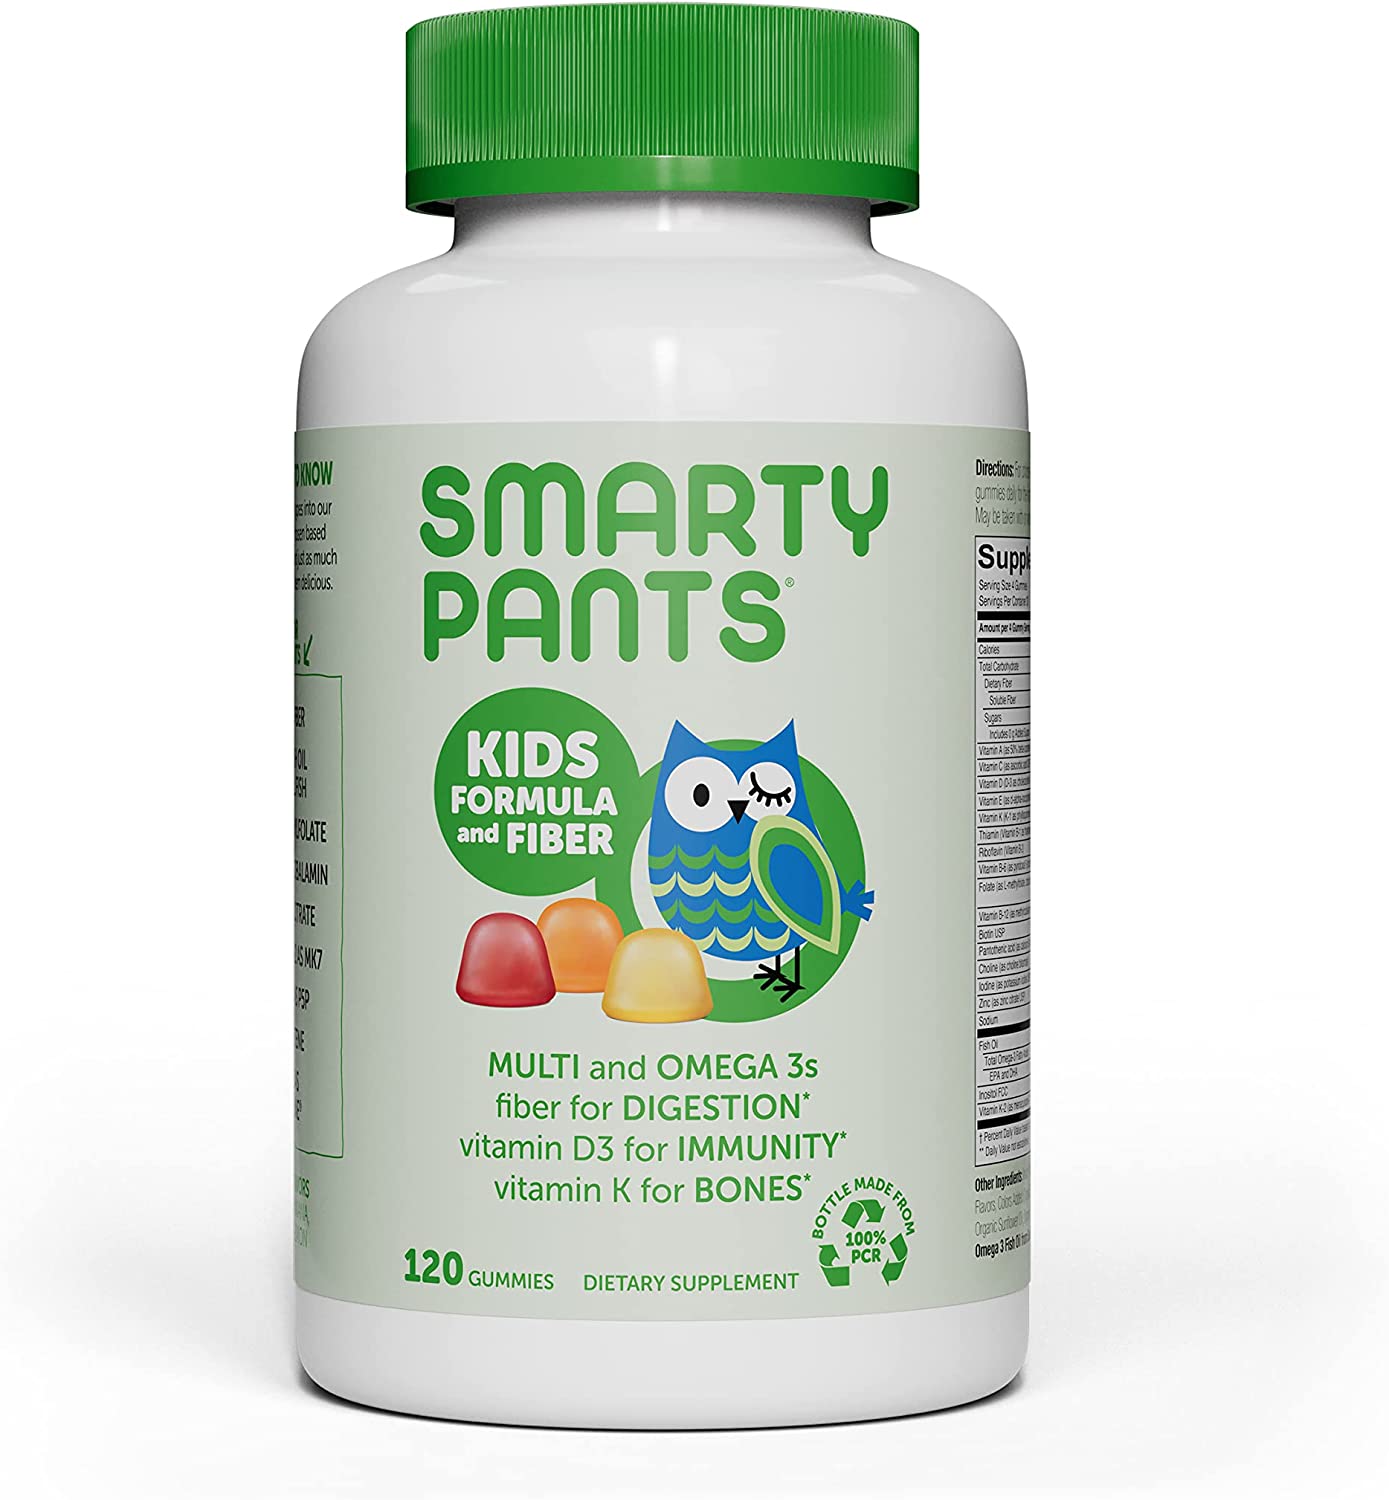 Kids Formula & Fiber Daily Gummy Multivitamin: Fiber for Digestive Health, Vitamin C, D3, & Zinc for Immunity, Omega 3 Fish Oil (EPA & DHA), B6, Methyl B12, 120 Count (30 Day Supply)